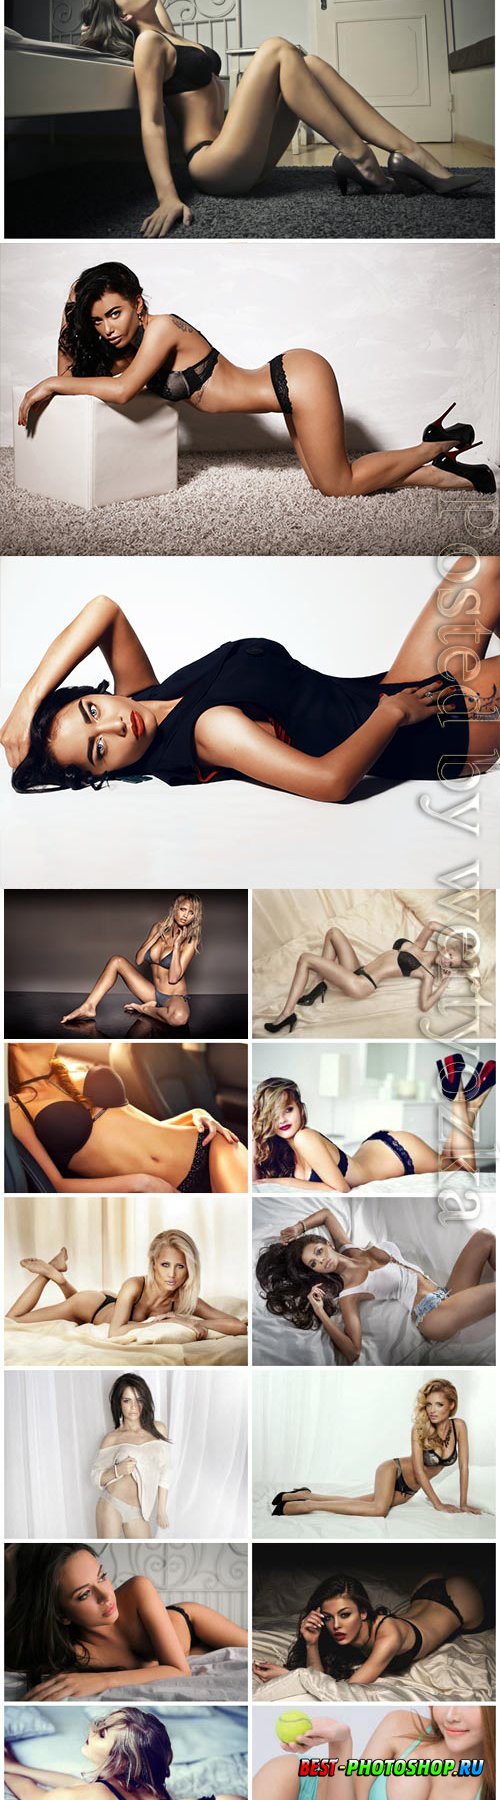 Luxury women in lingerie posing stock photo vol 7